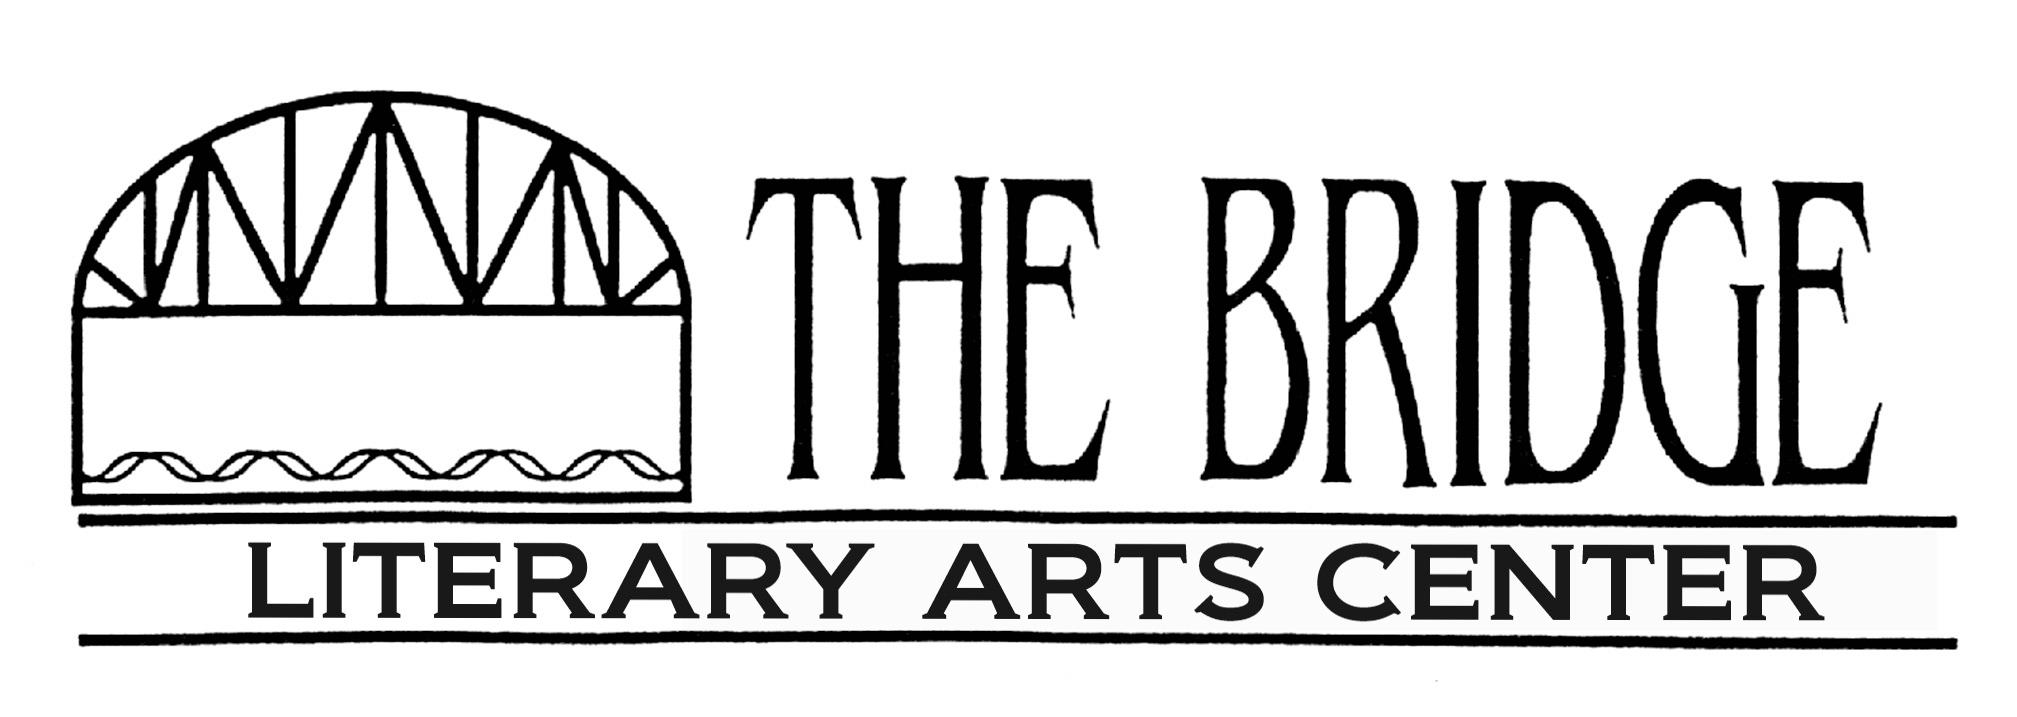 The Bridge Literary Arts Center